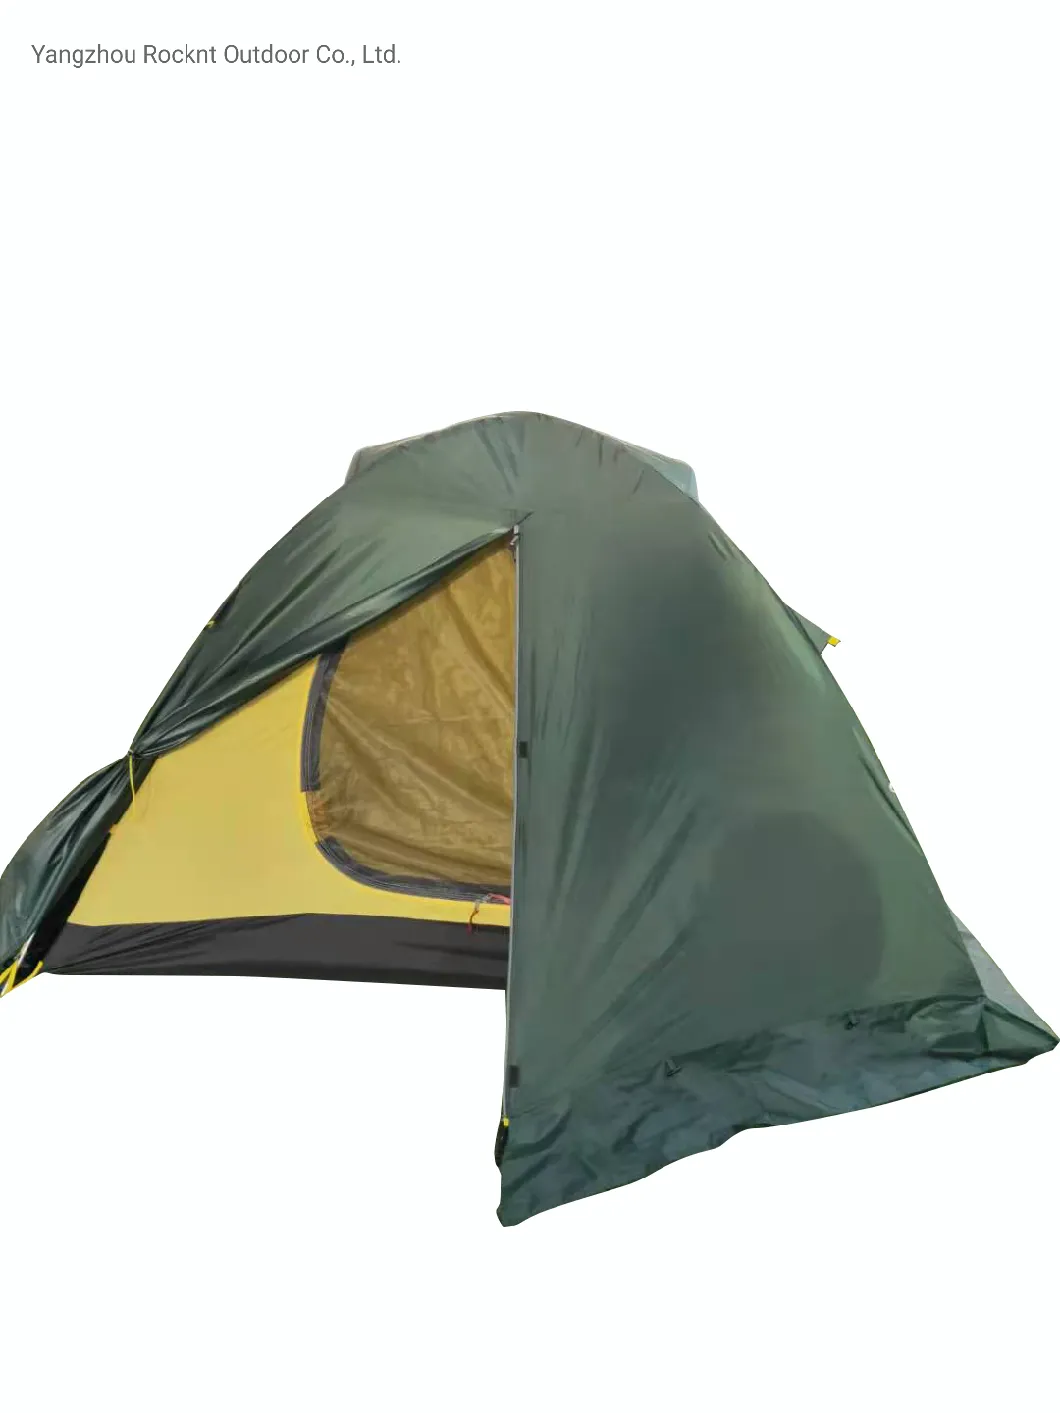 2 Persons Tourist Camping Waterproof Portable Beach Tent Fiberglass